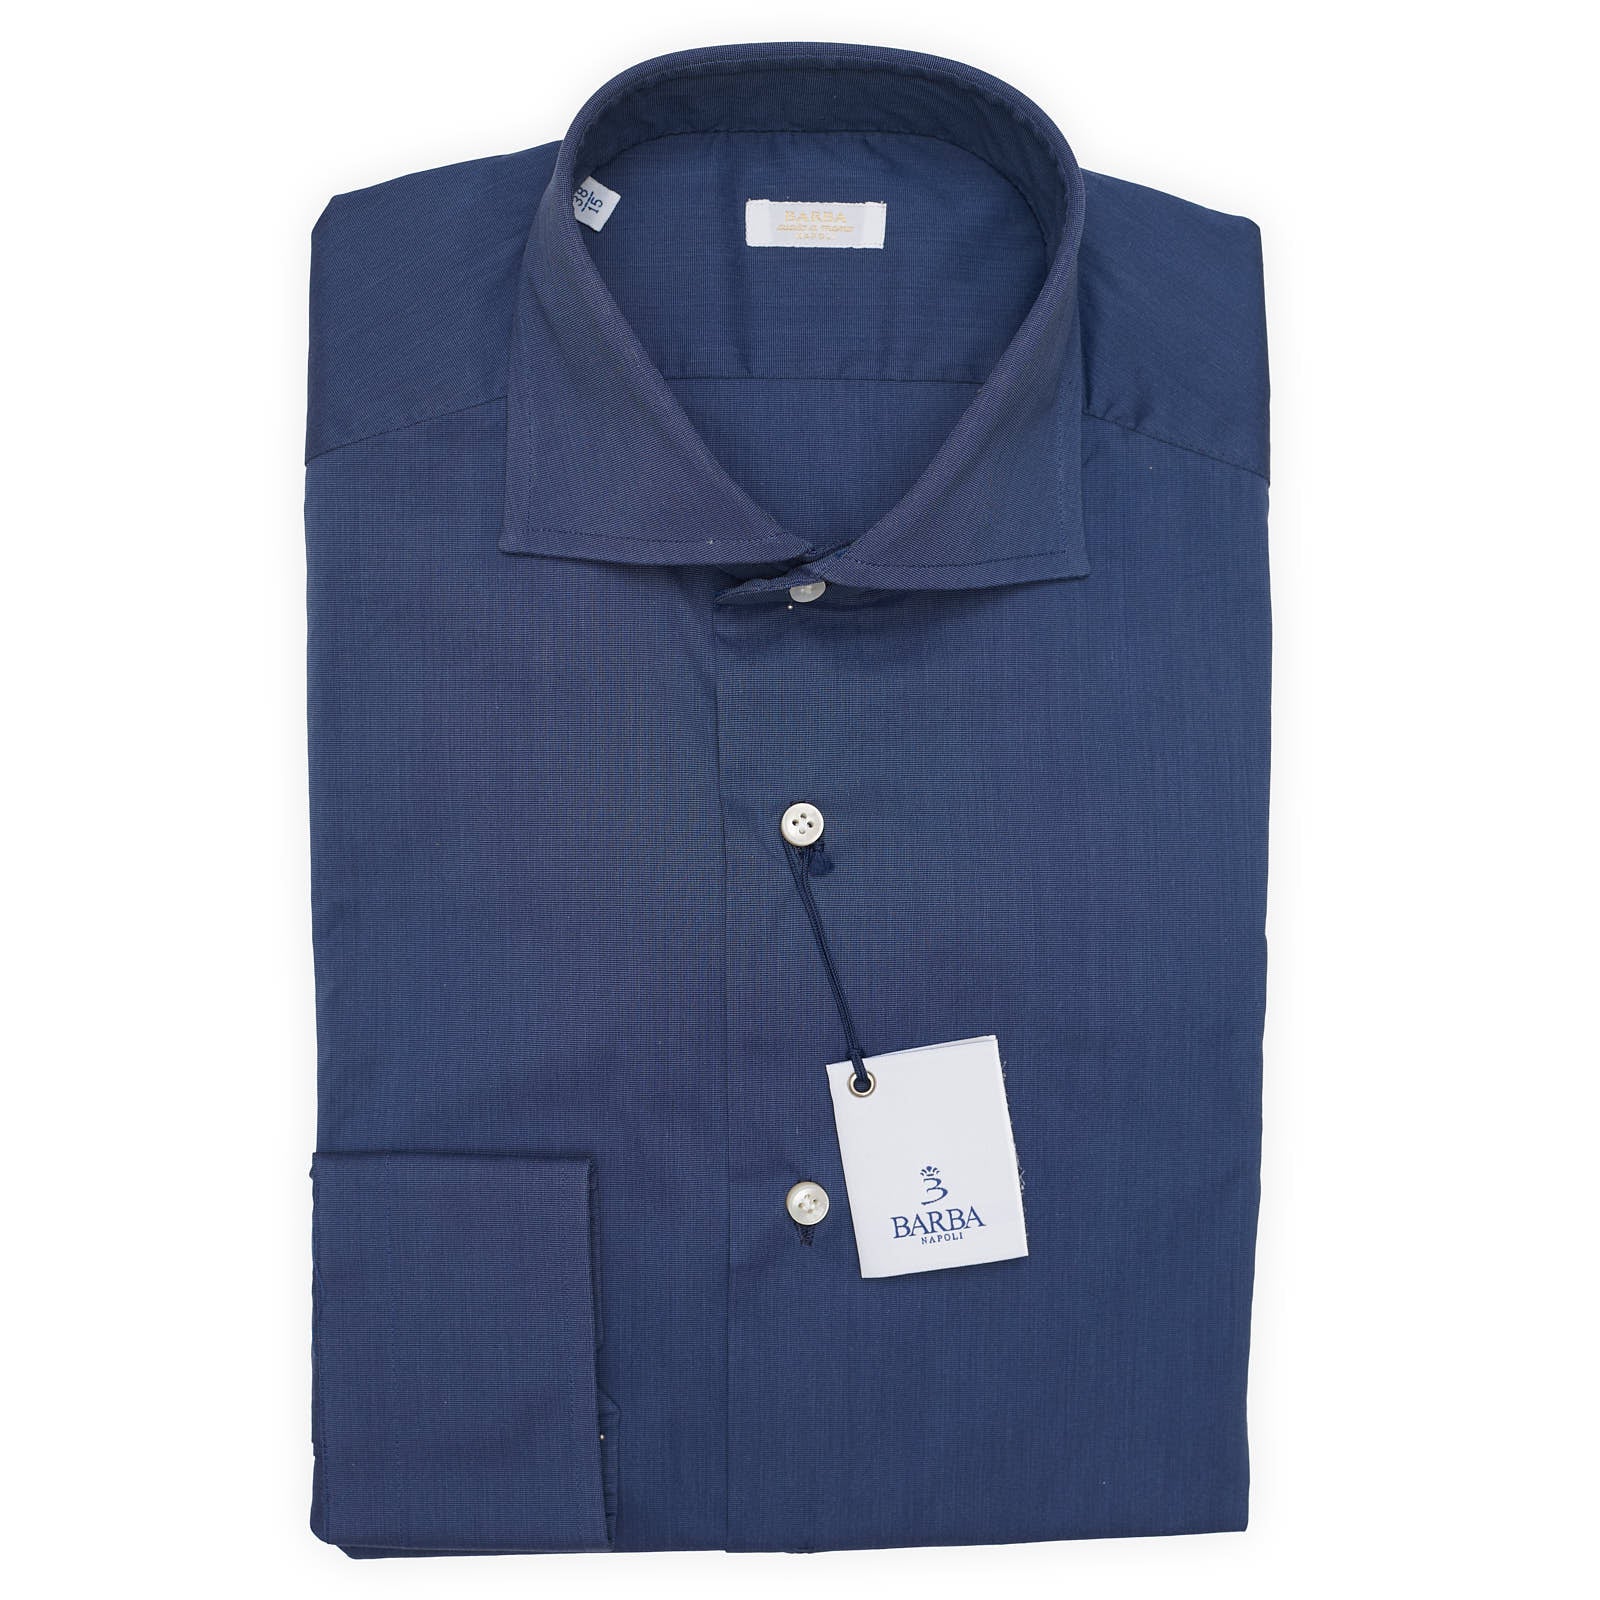 BARBA Napoli Handmade Solid Navy Blue Stretch Shirt EU 38 NEW US 15